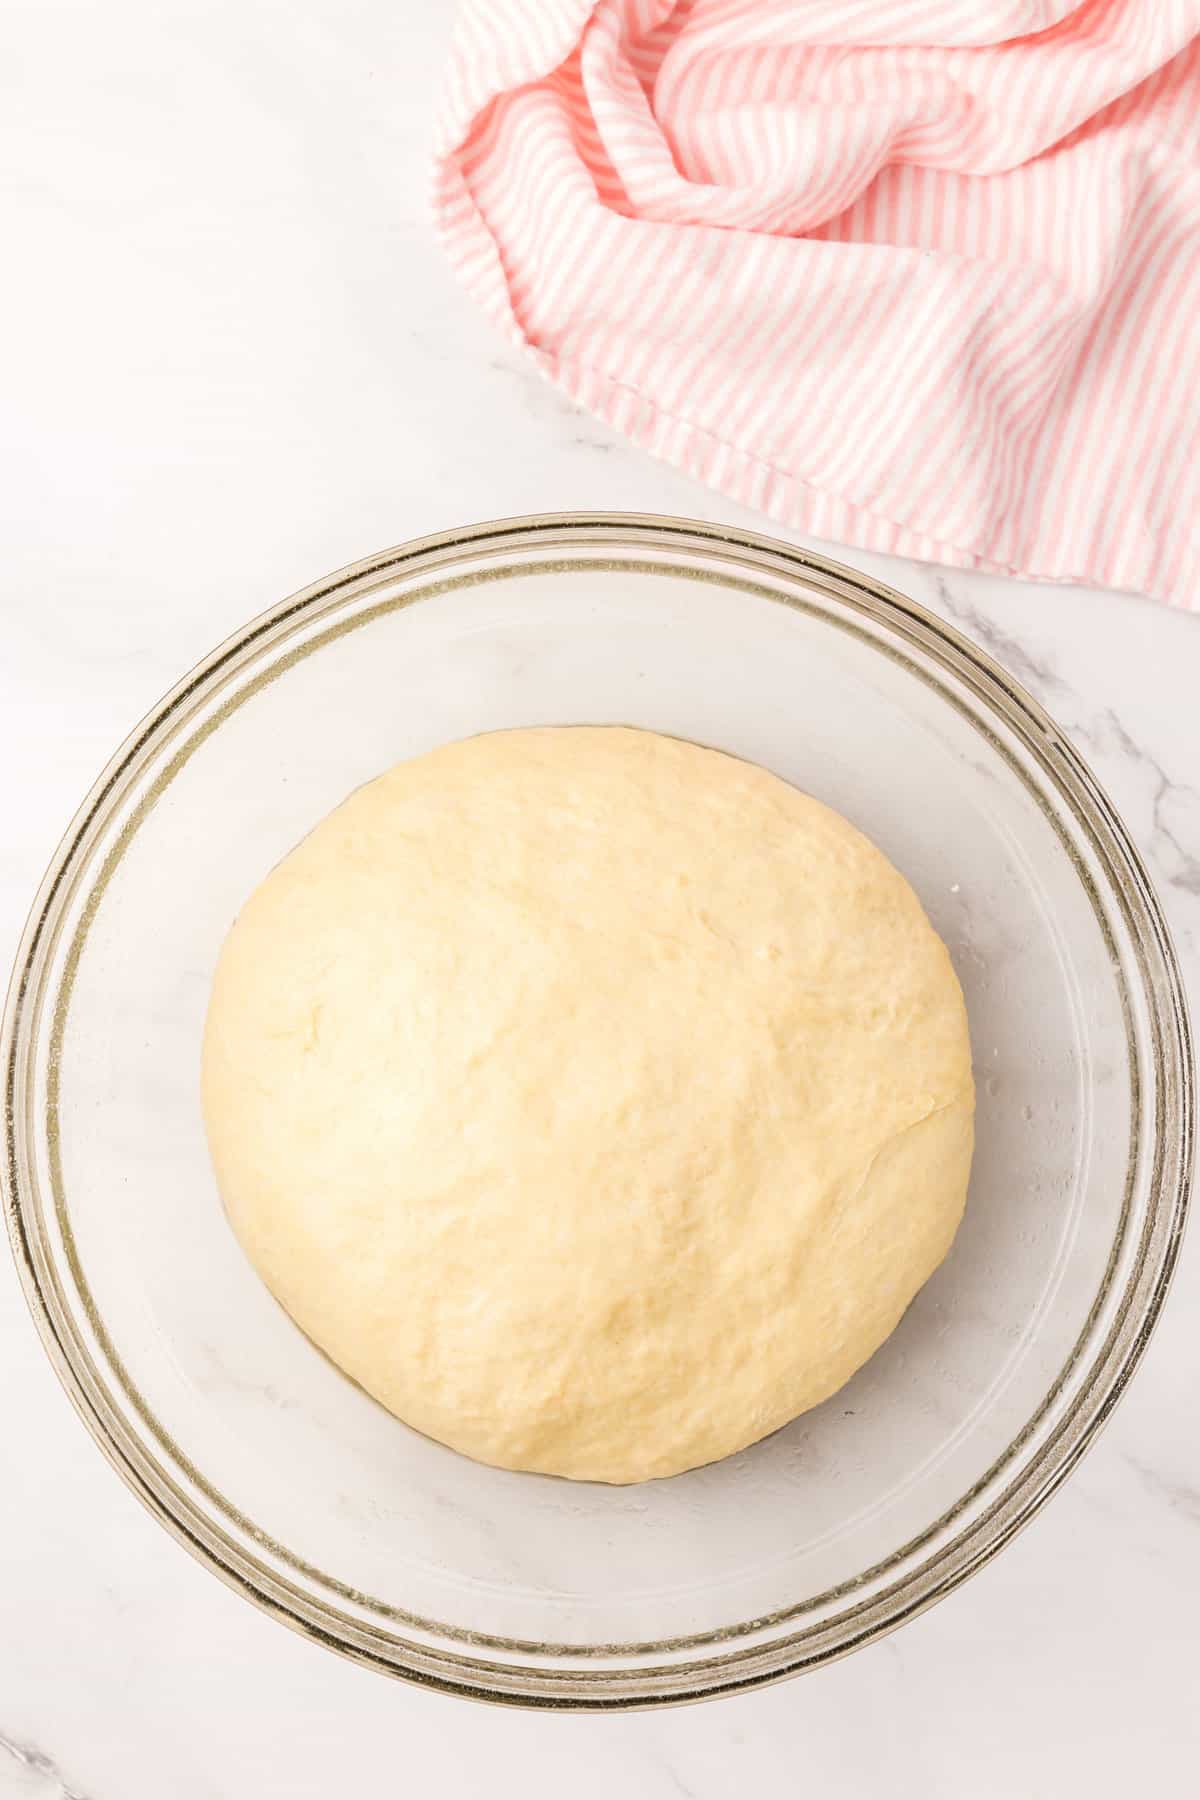 Homemade English Muffin Dough Prepared in Glass Bowl